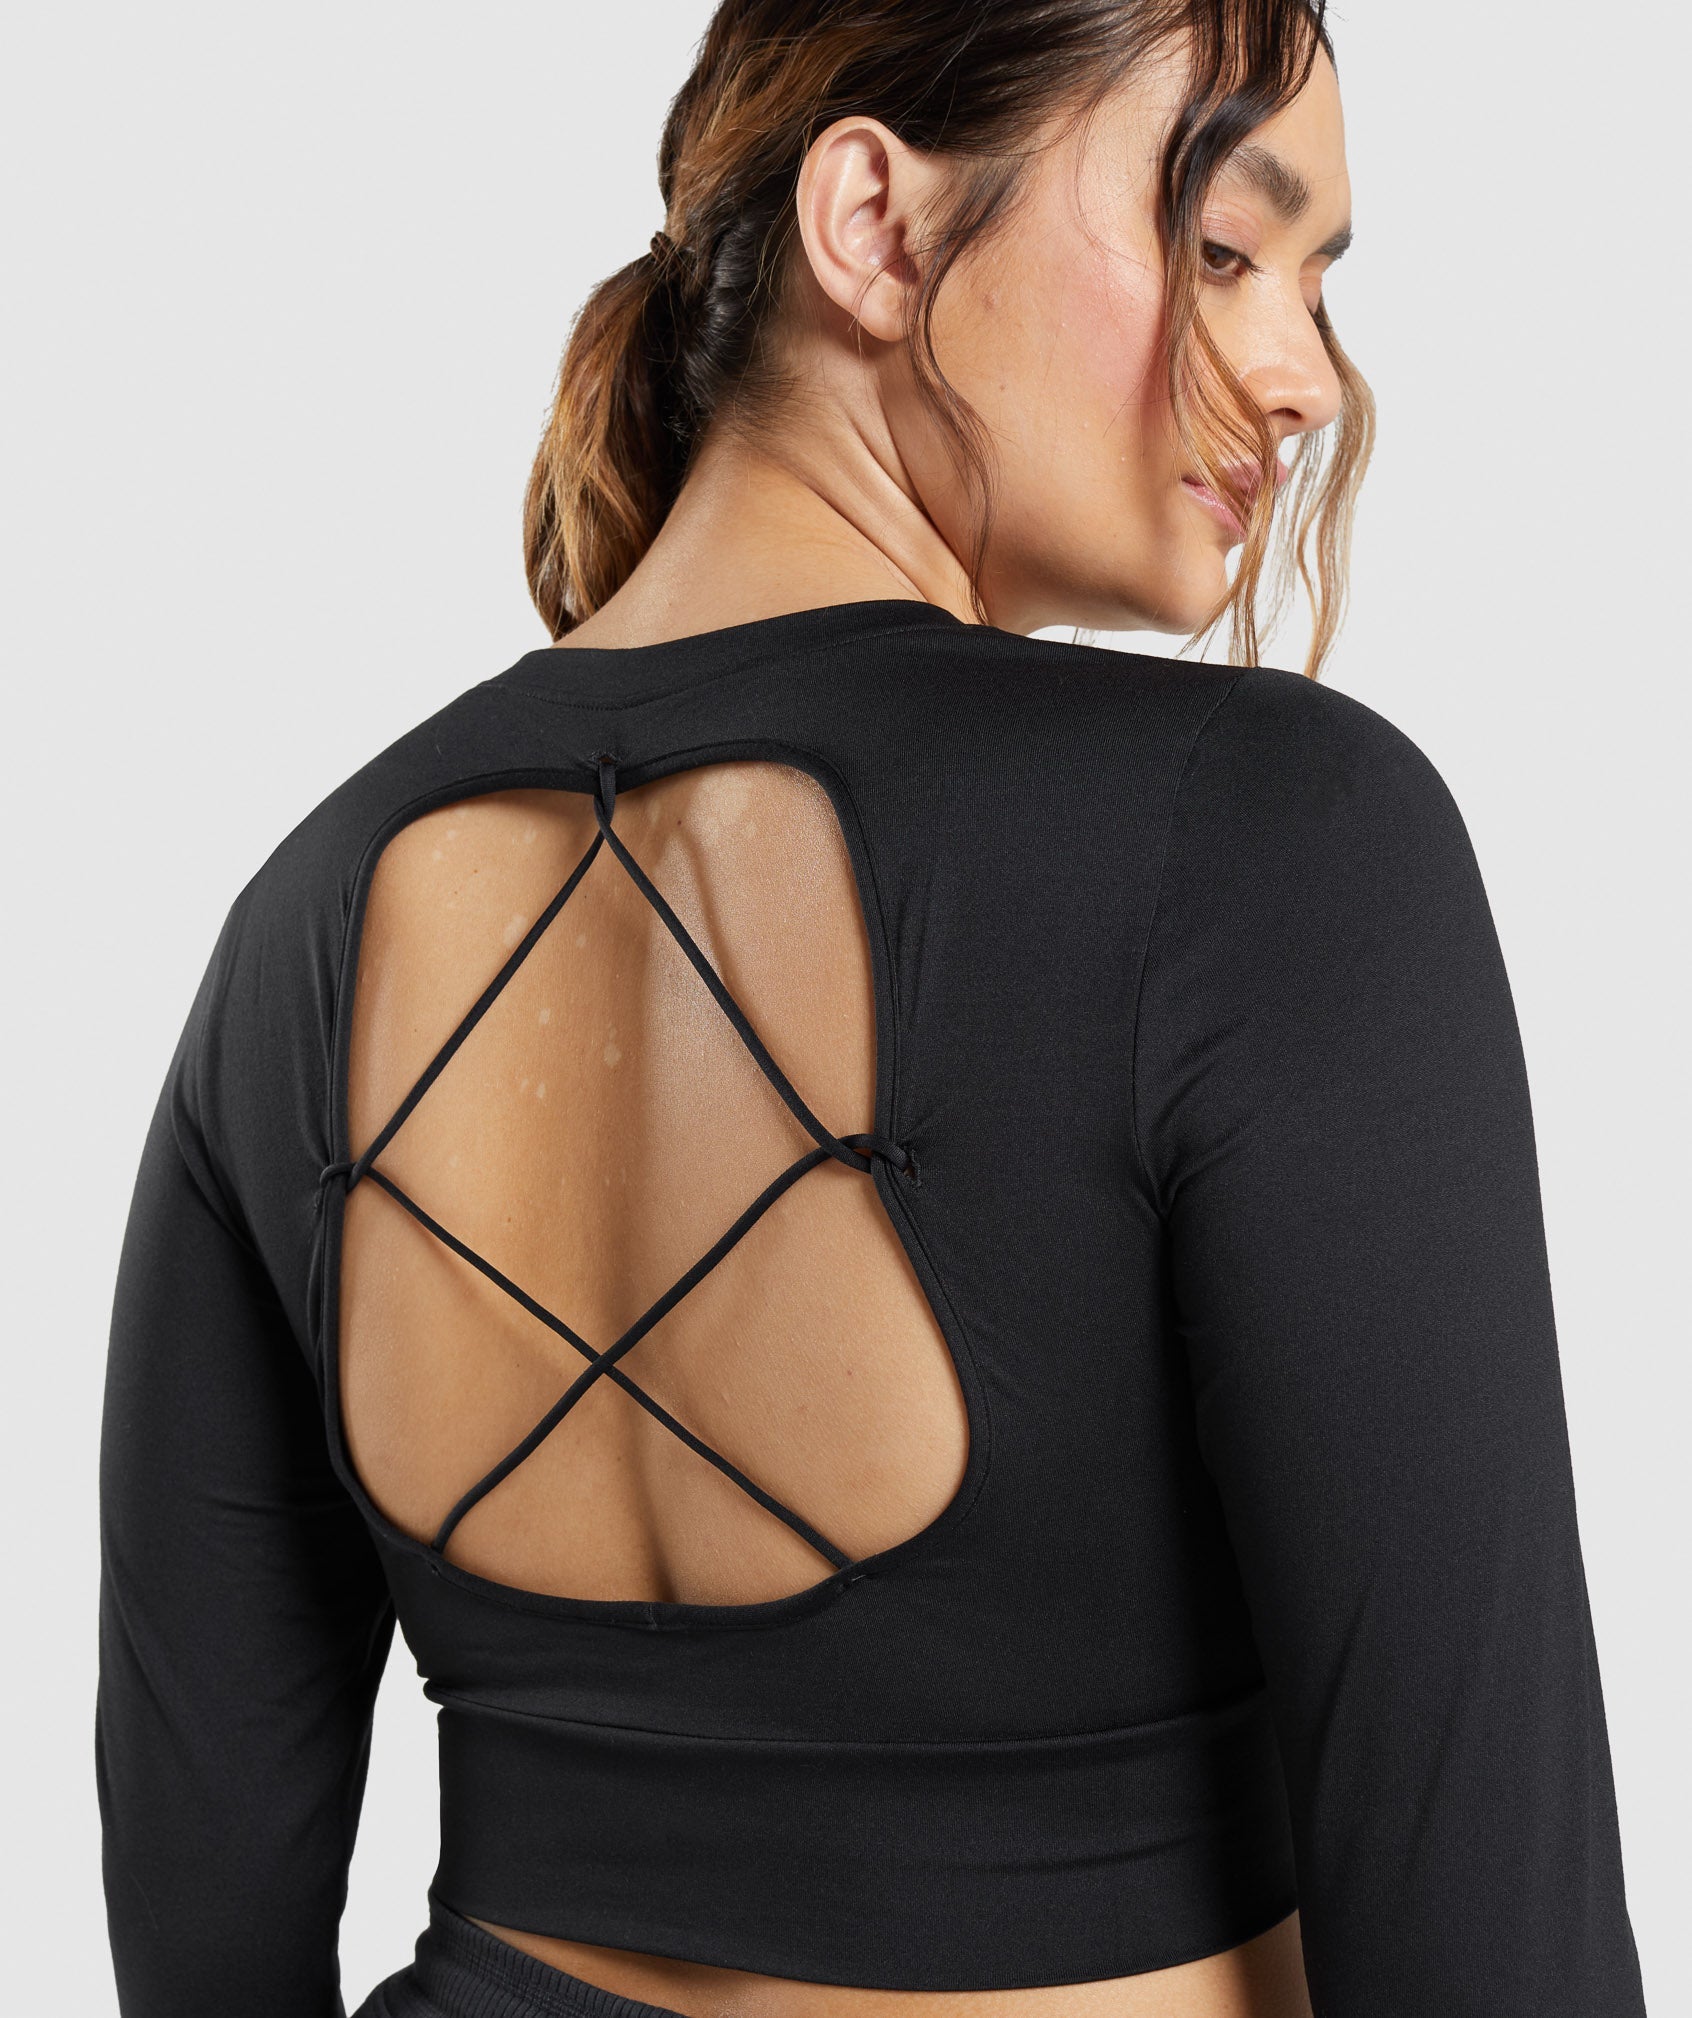  PINSPARK Long Sleeve Crop Top Open Back Tops for Women